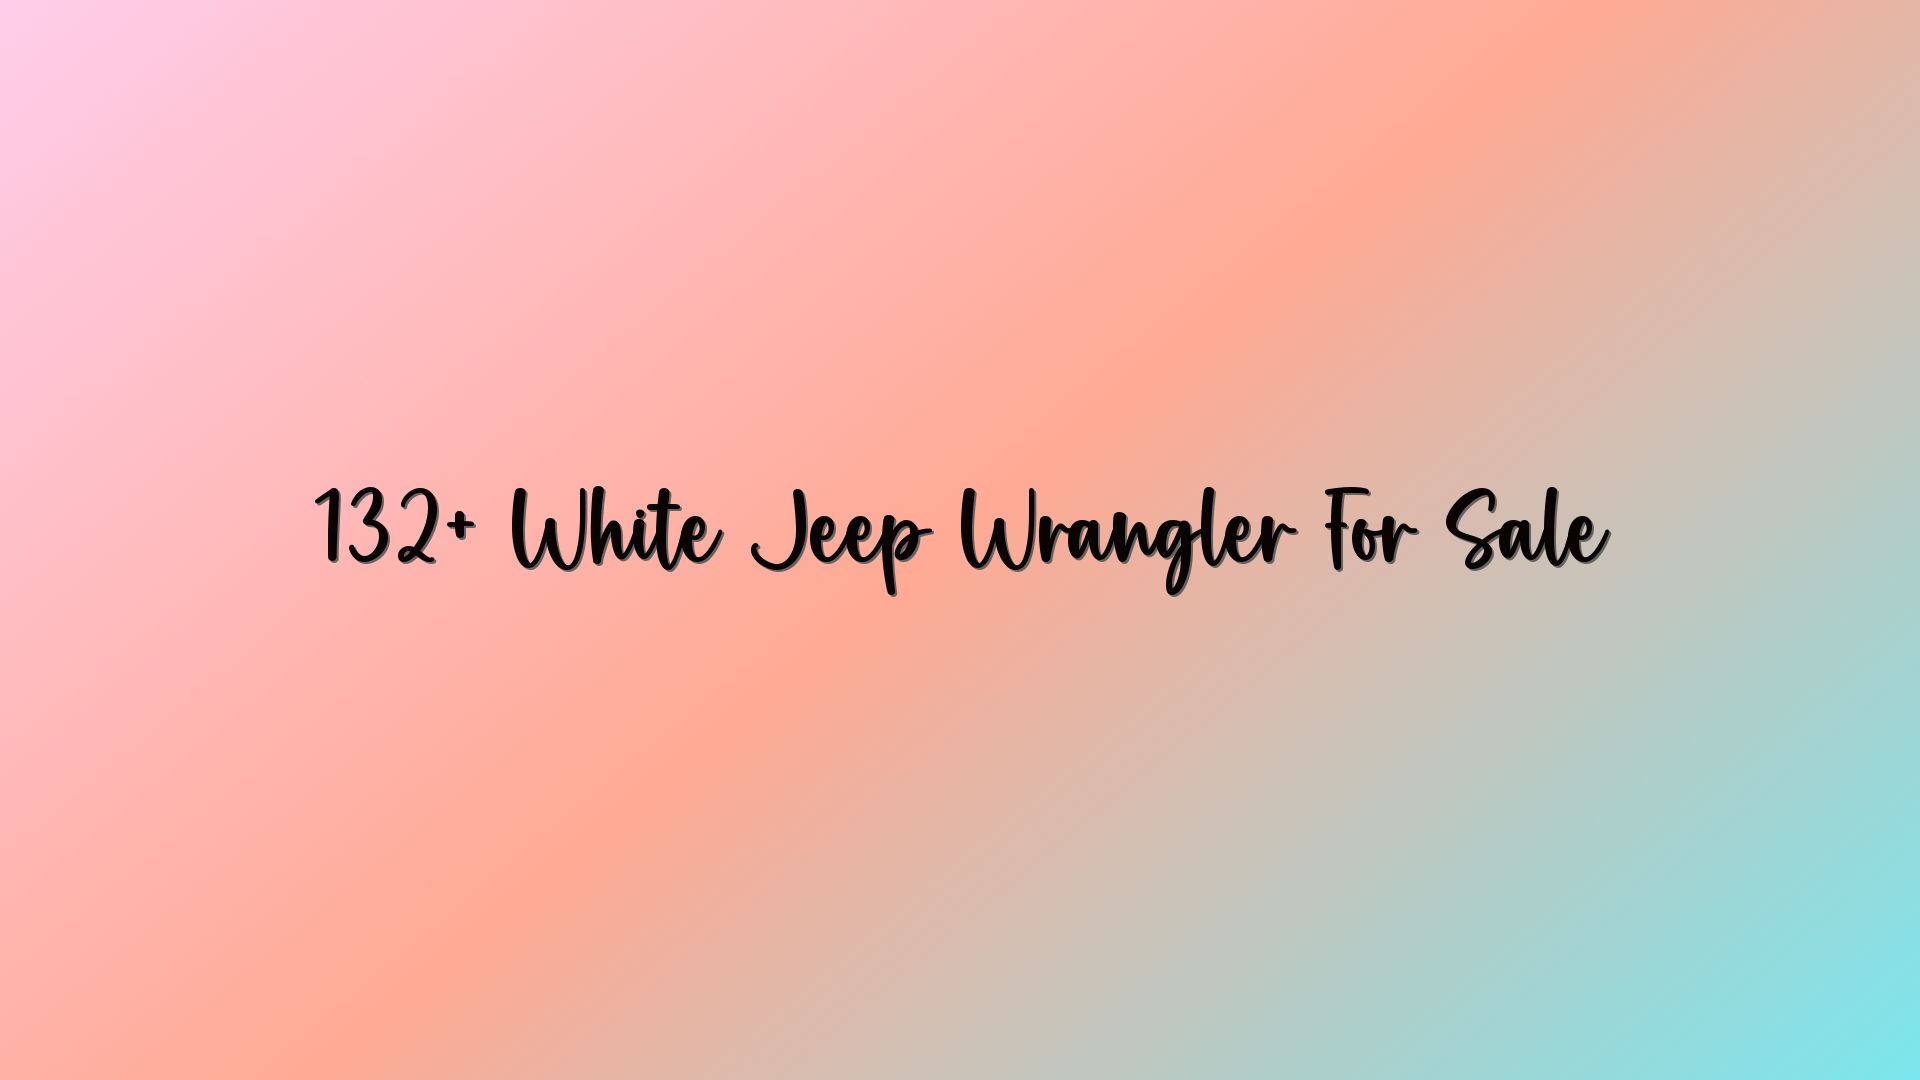 132+ White Jeep Wrangler For Sale